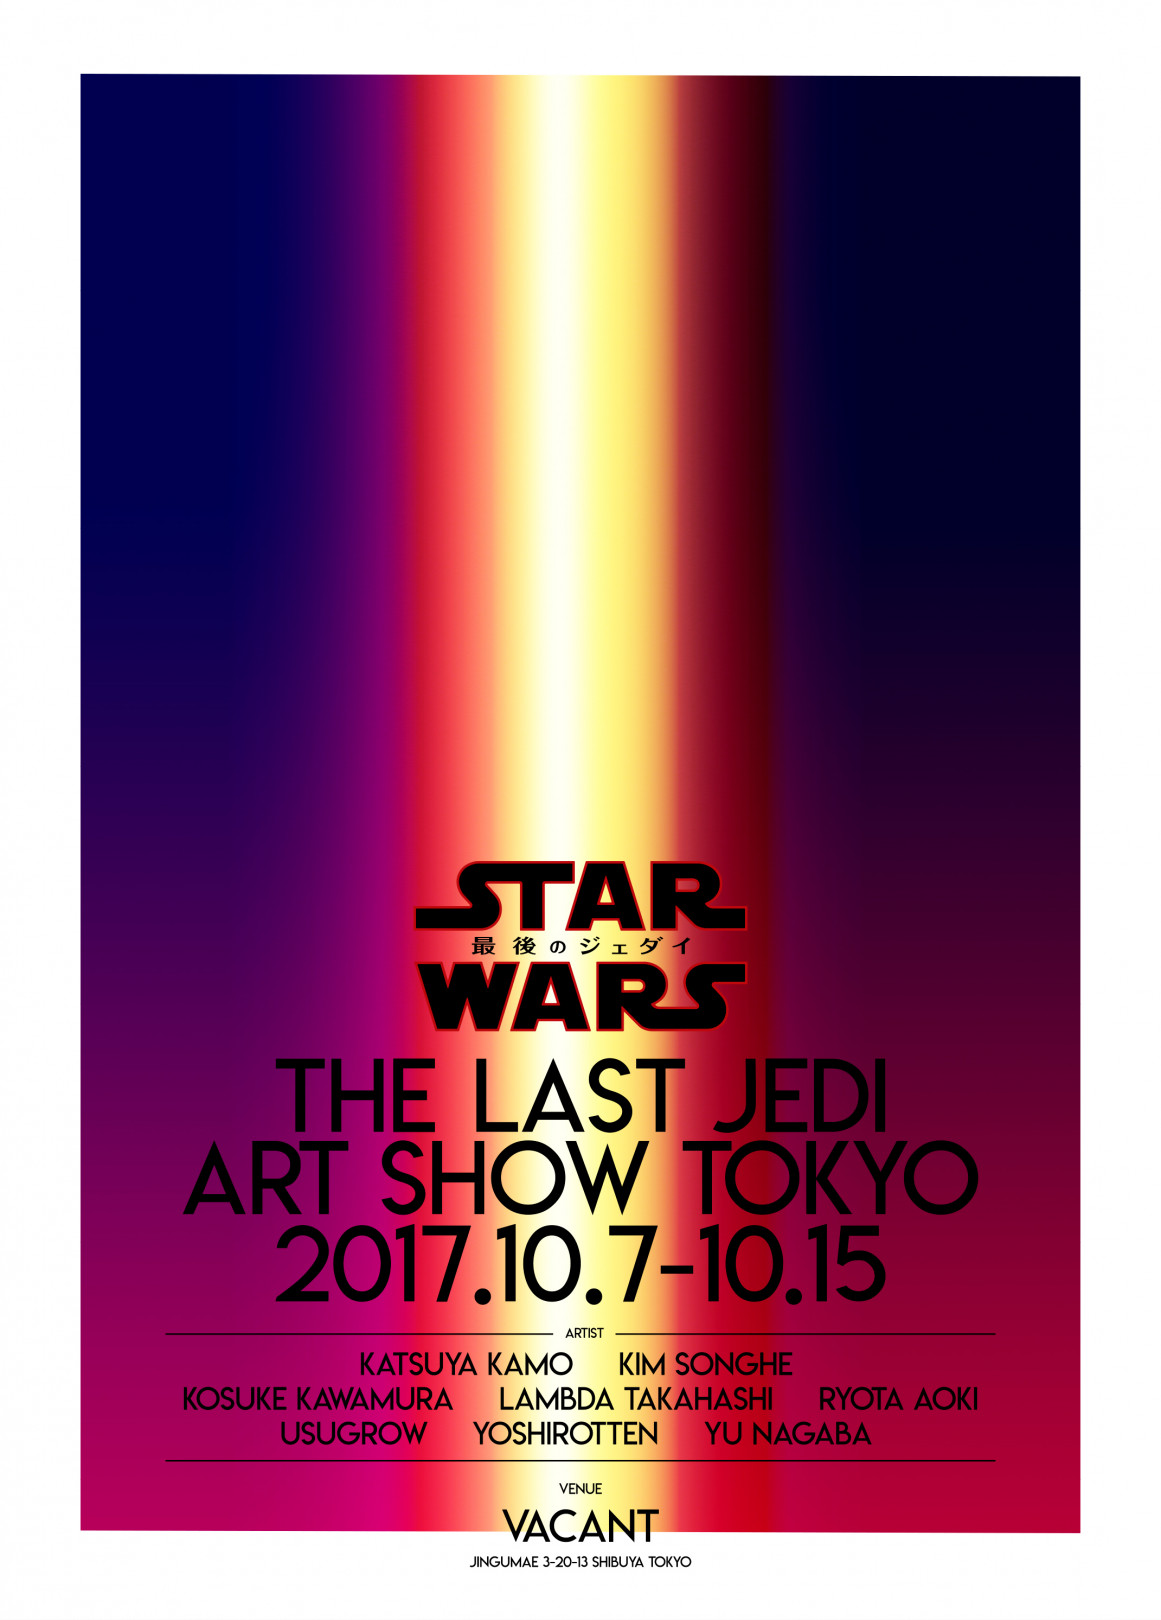 STARWARS THE LAST JEDI ART SHOW TOKYO